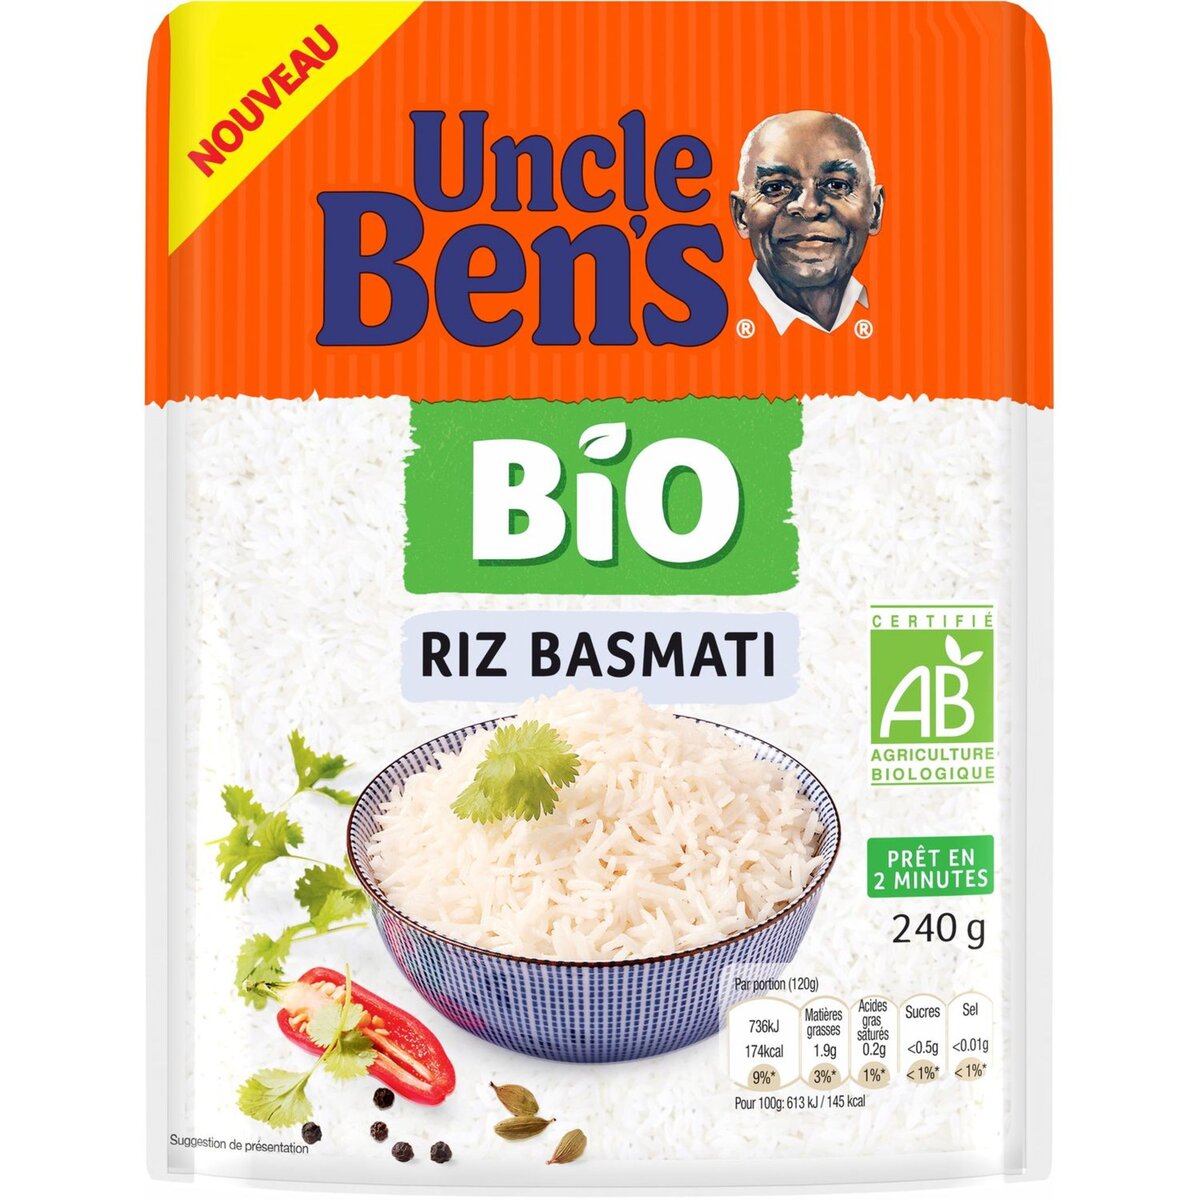 Ben's Original Riz Basmati 1Kg 